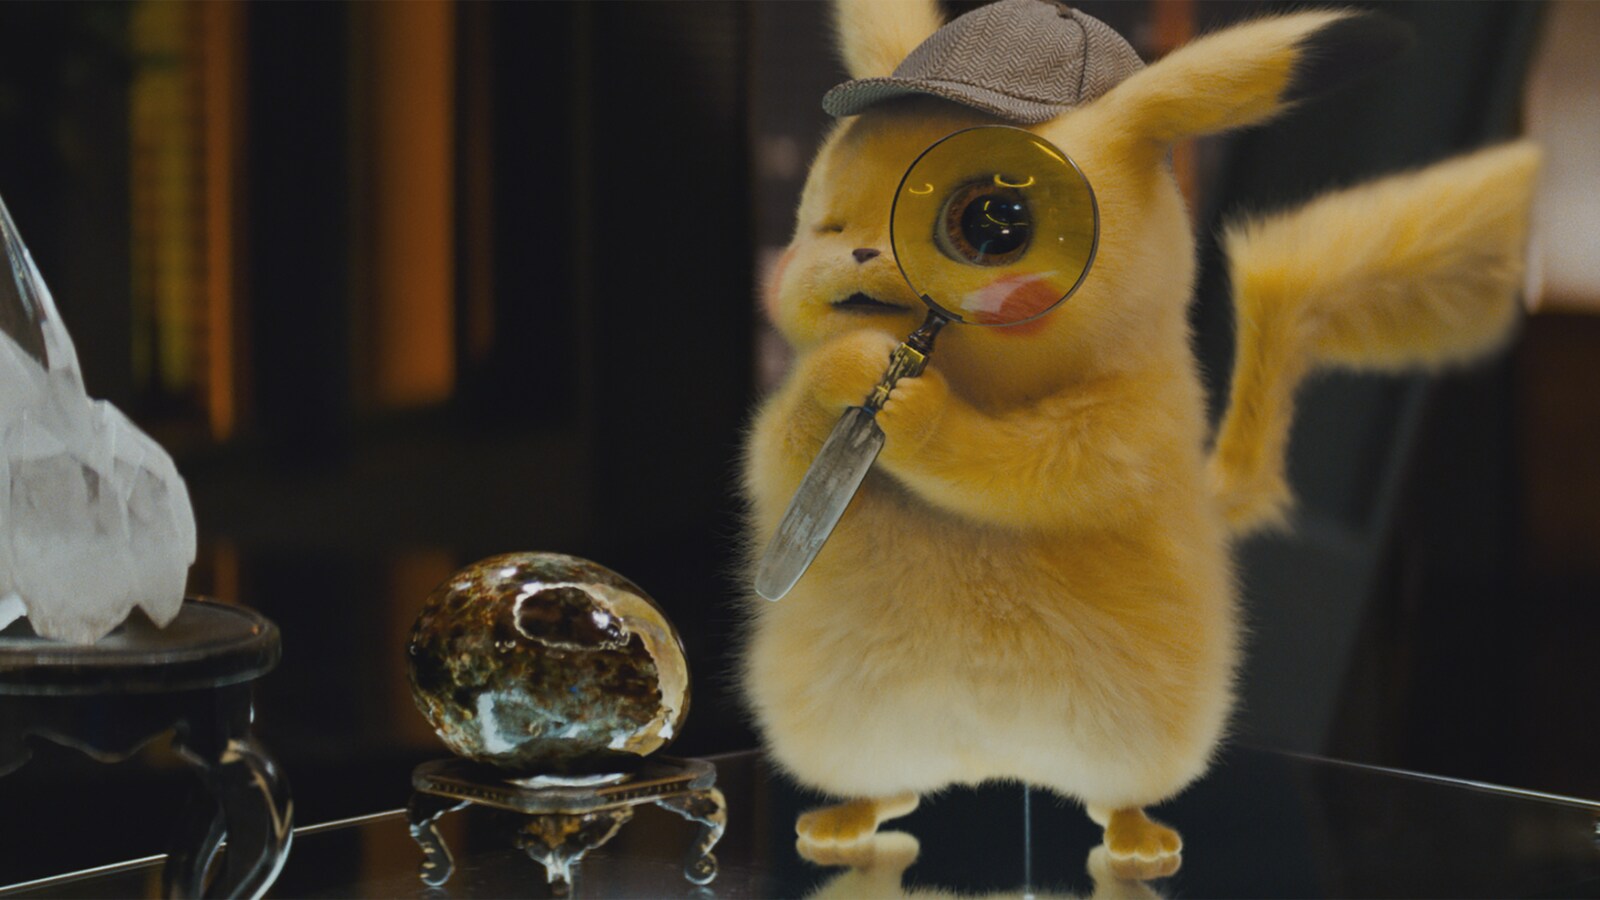 pokemon-detective-pikachu-2019